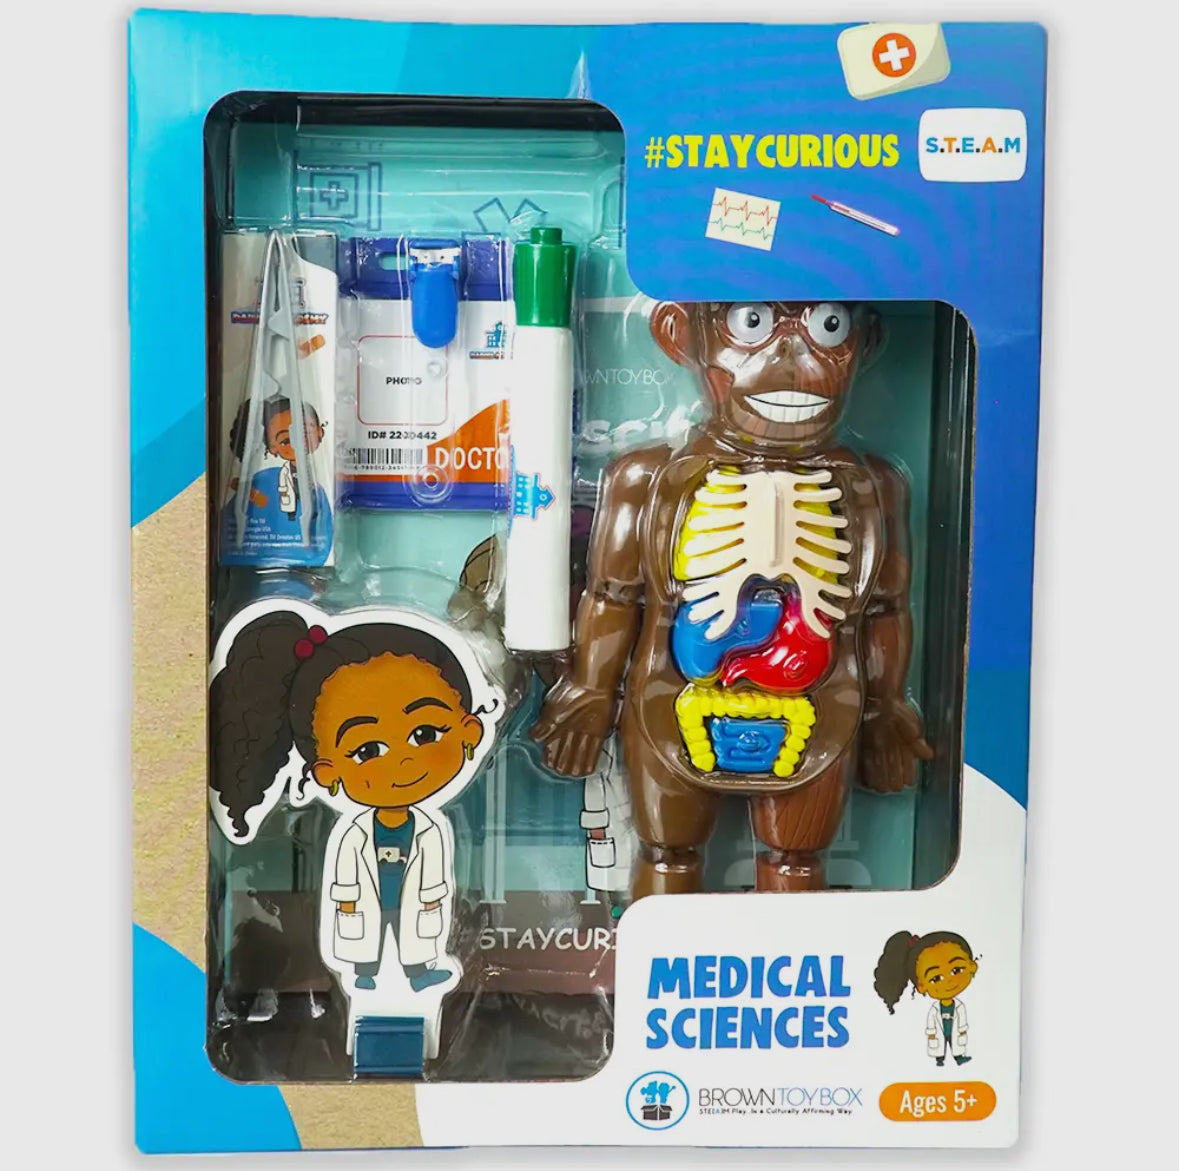 Medical Sciences Steam Kit